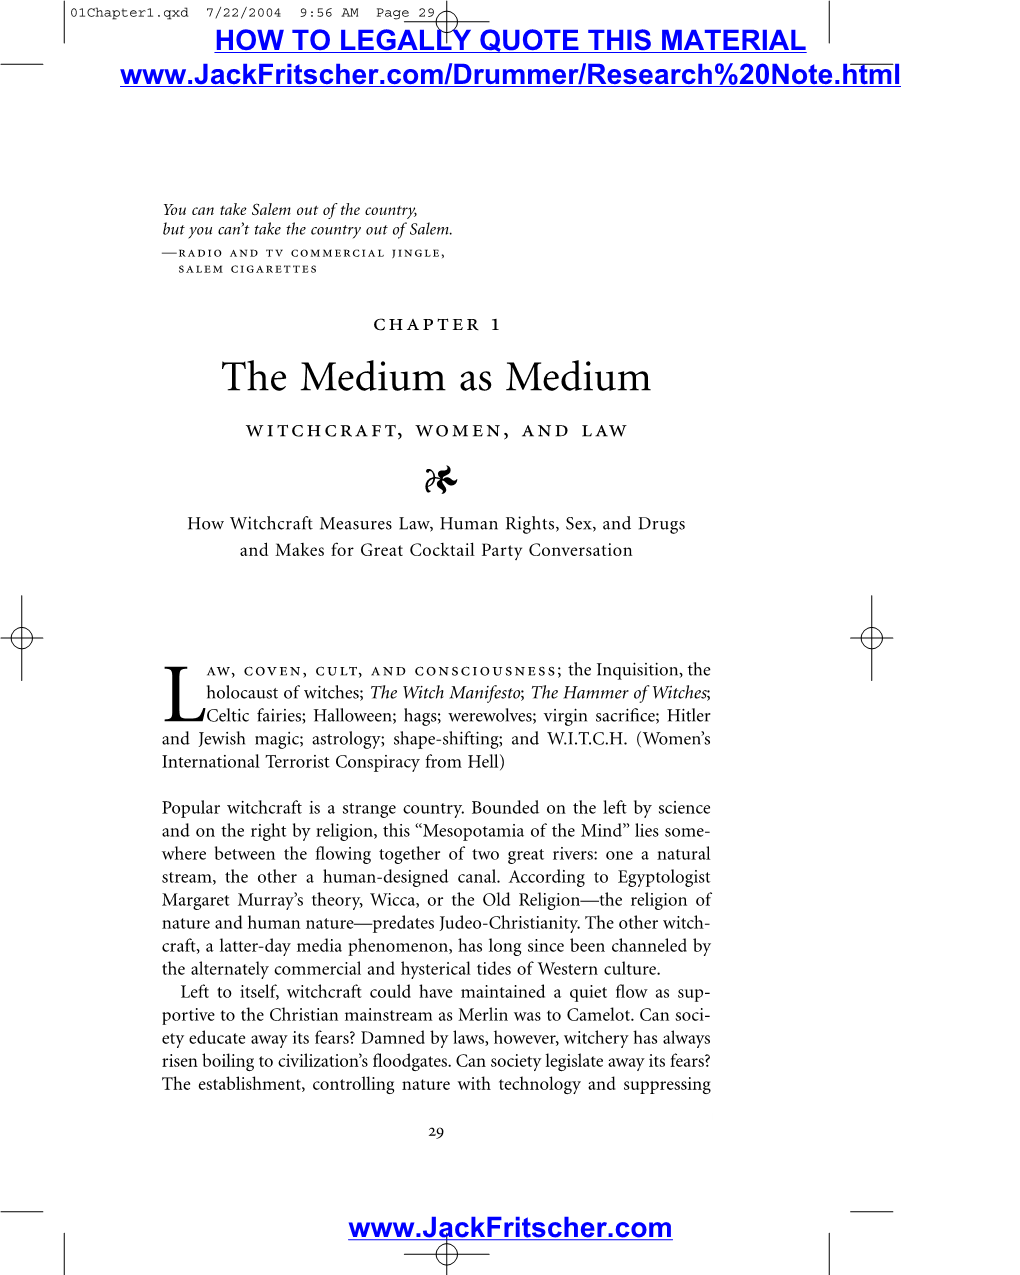 The Medium As Medium (